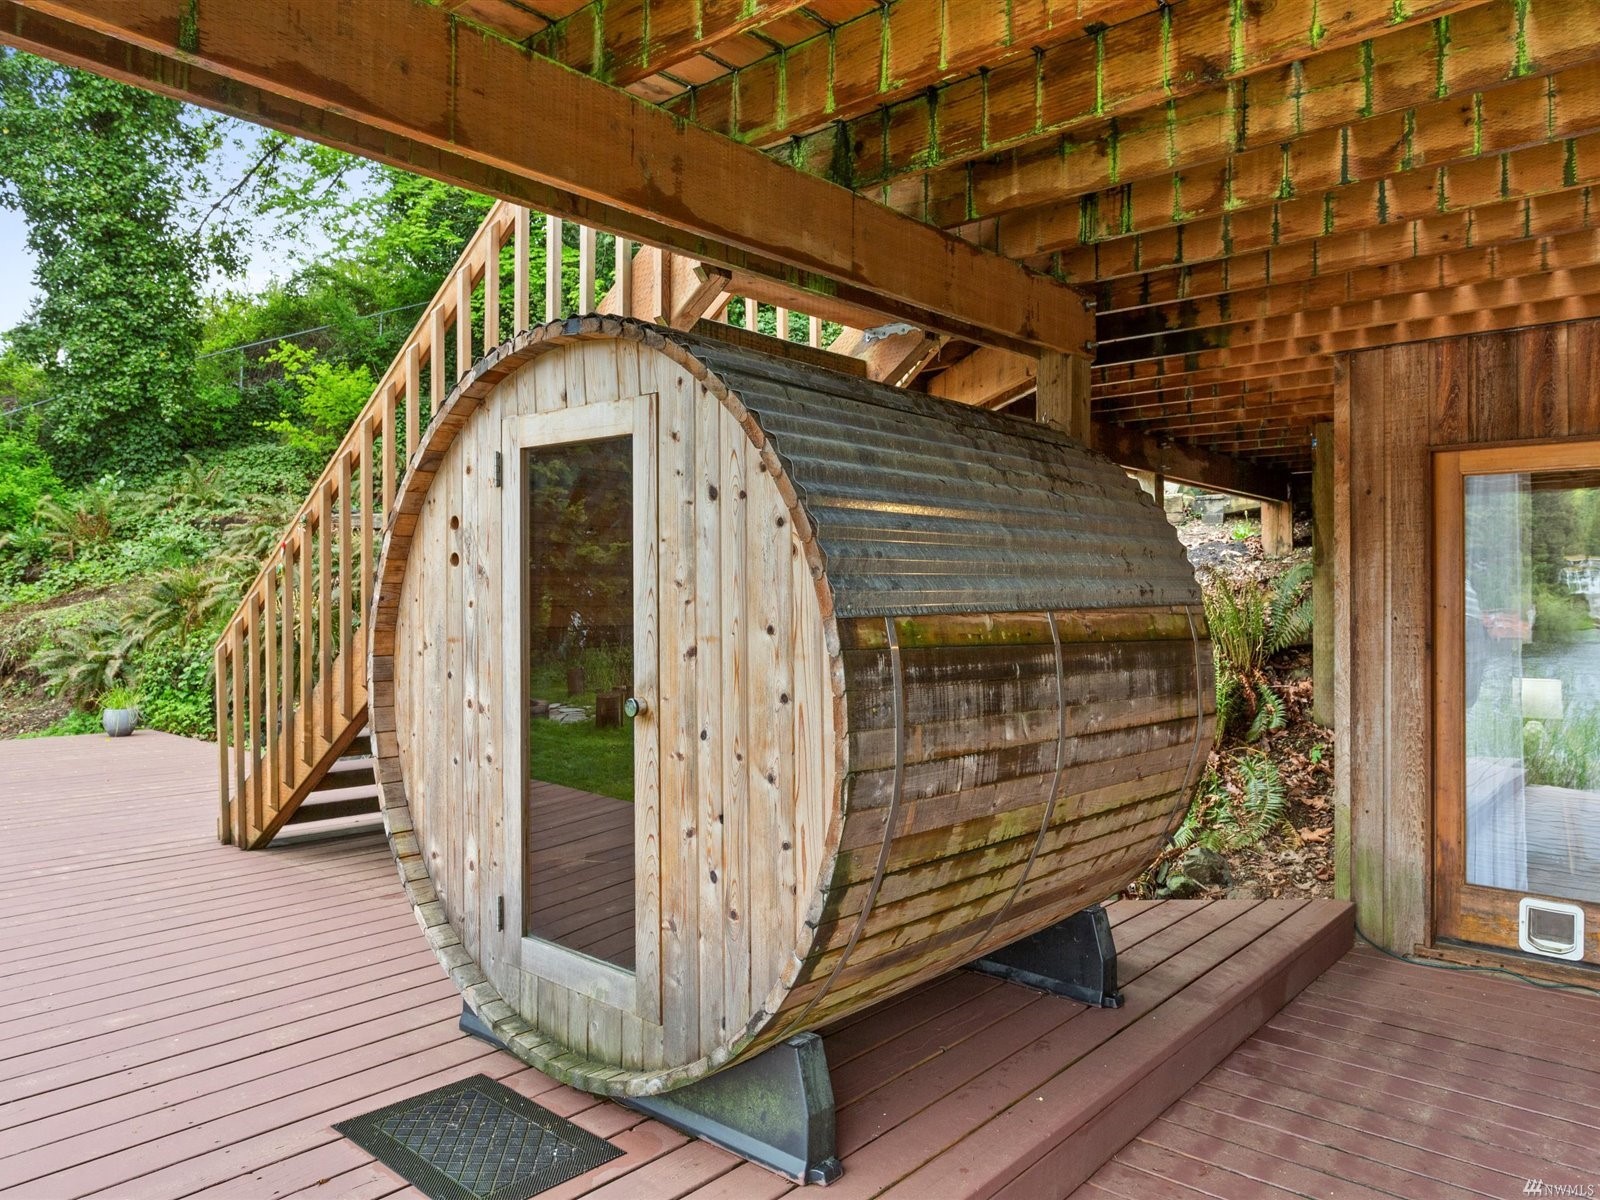 A sauna at the Martha Lake home